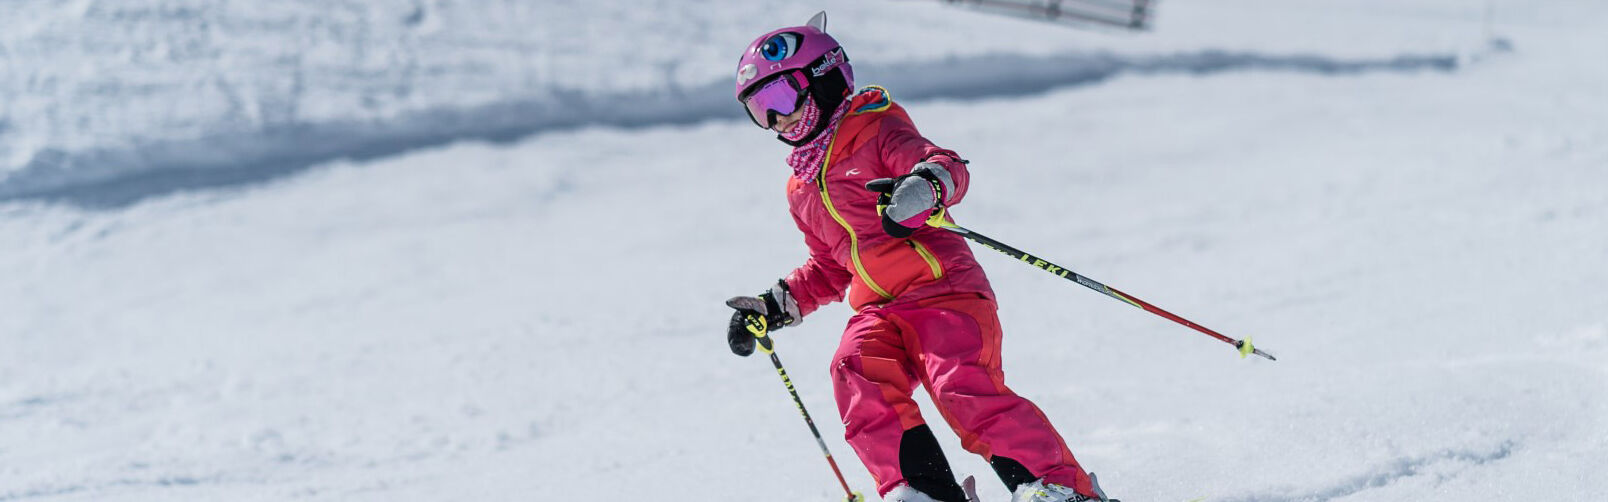 Ski school Flachau - specially trained children's ski instructors